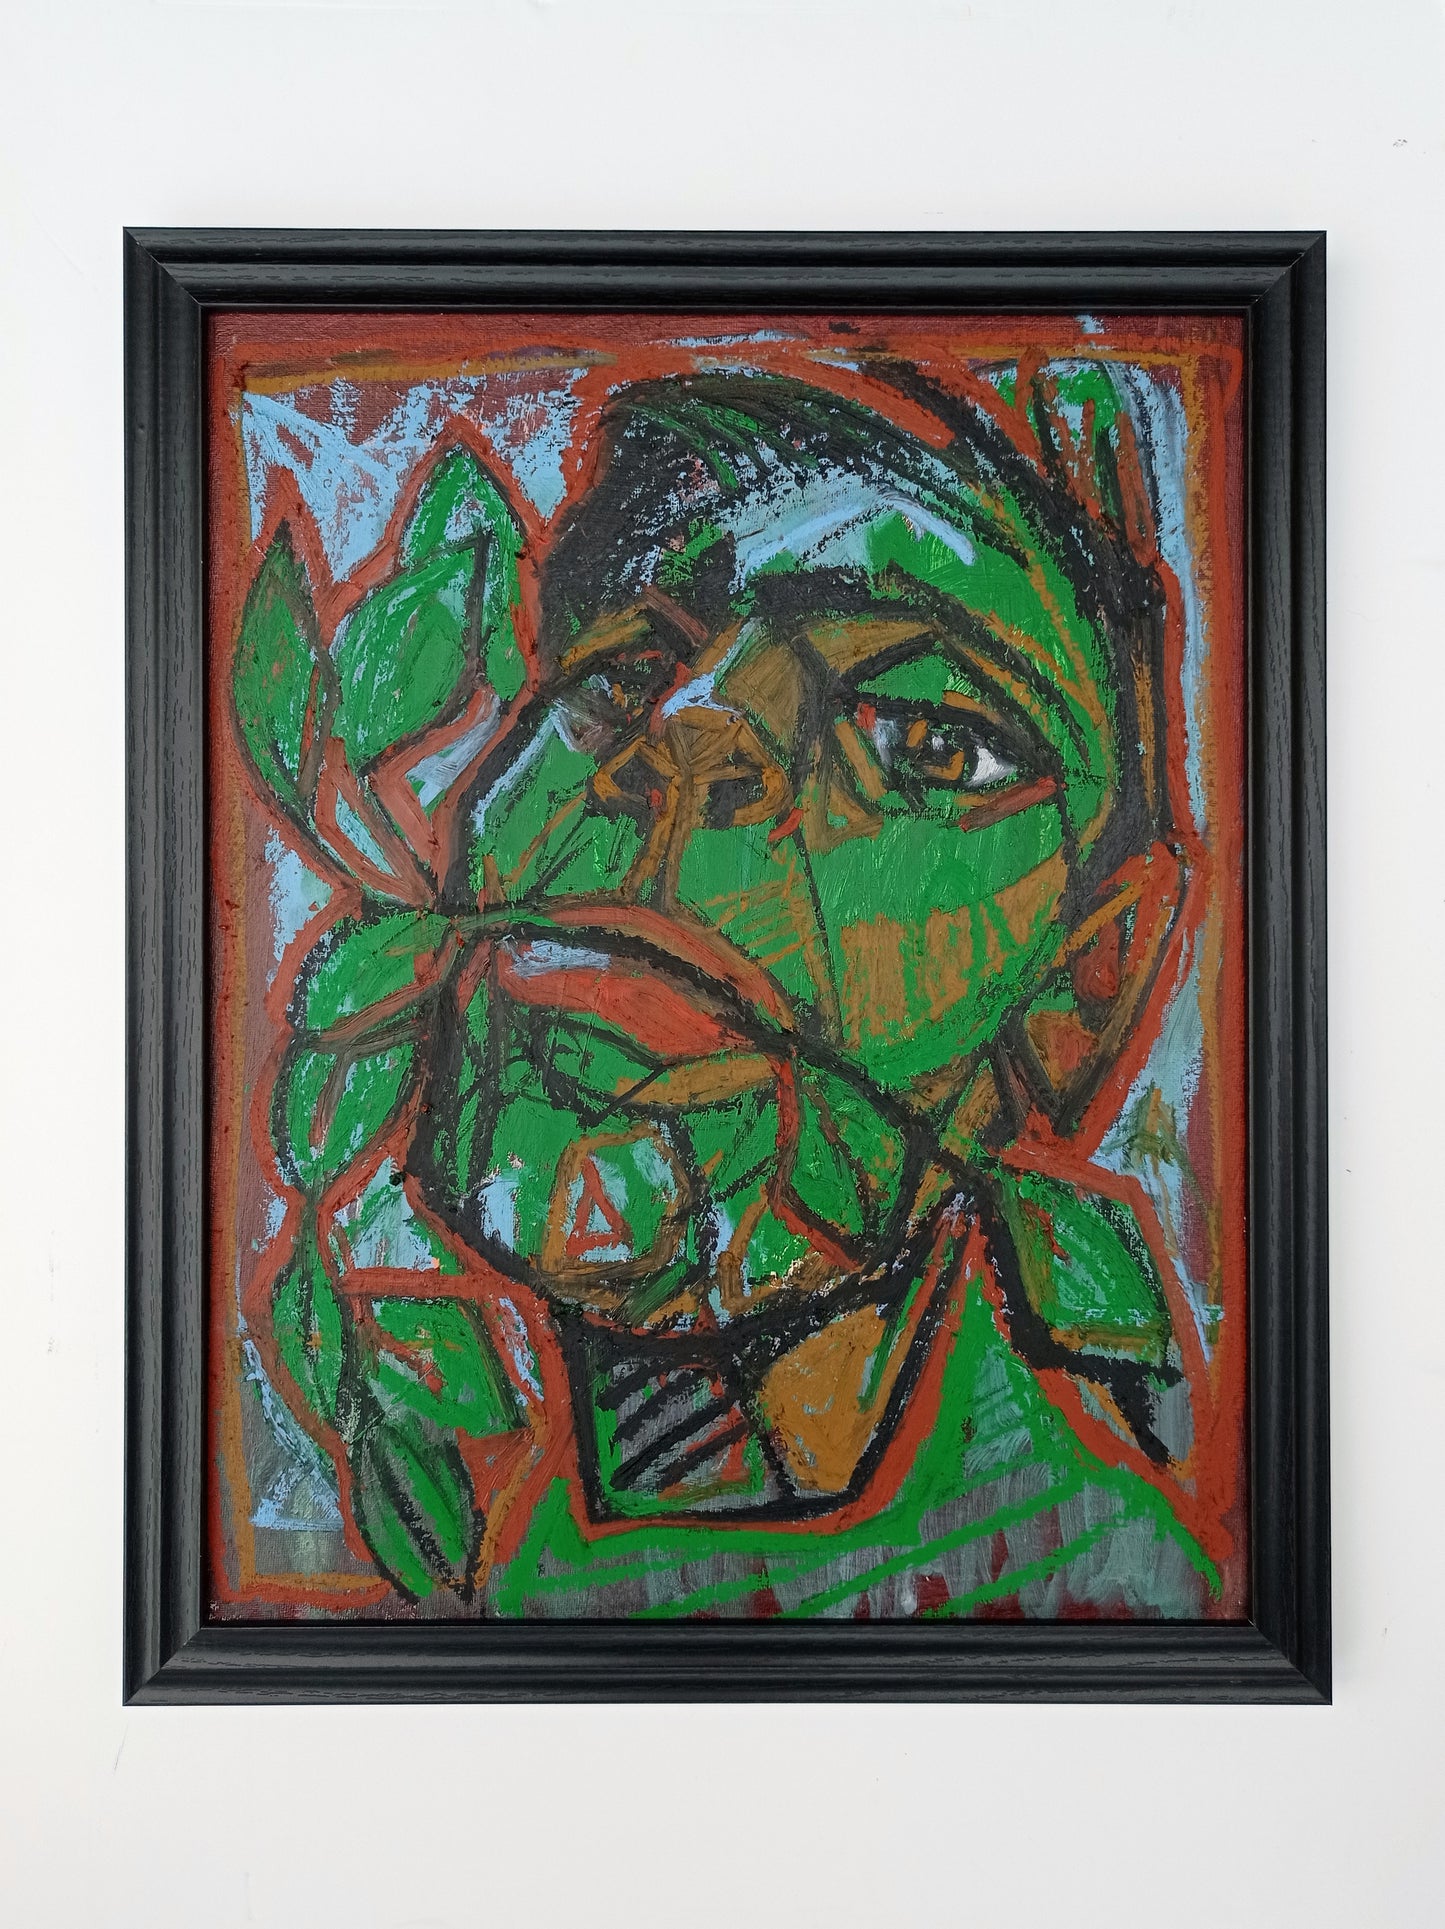 Self portrait as Green Man